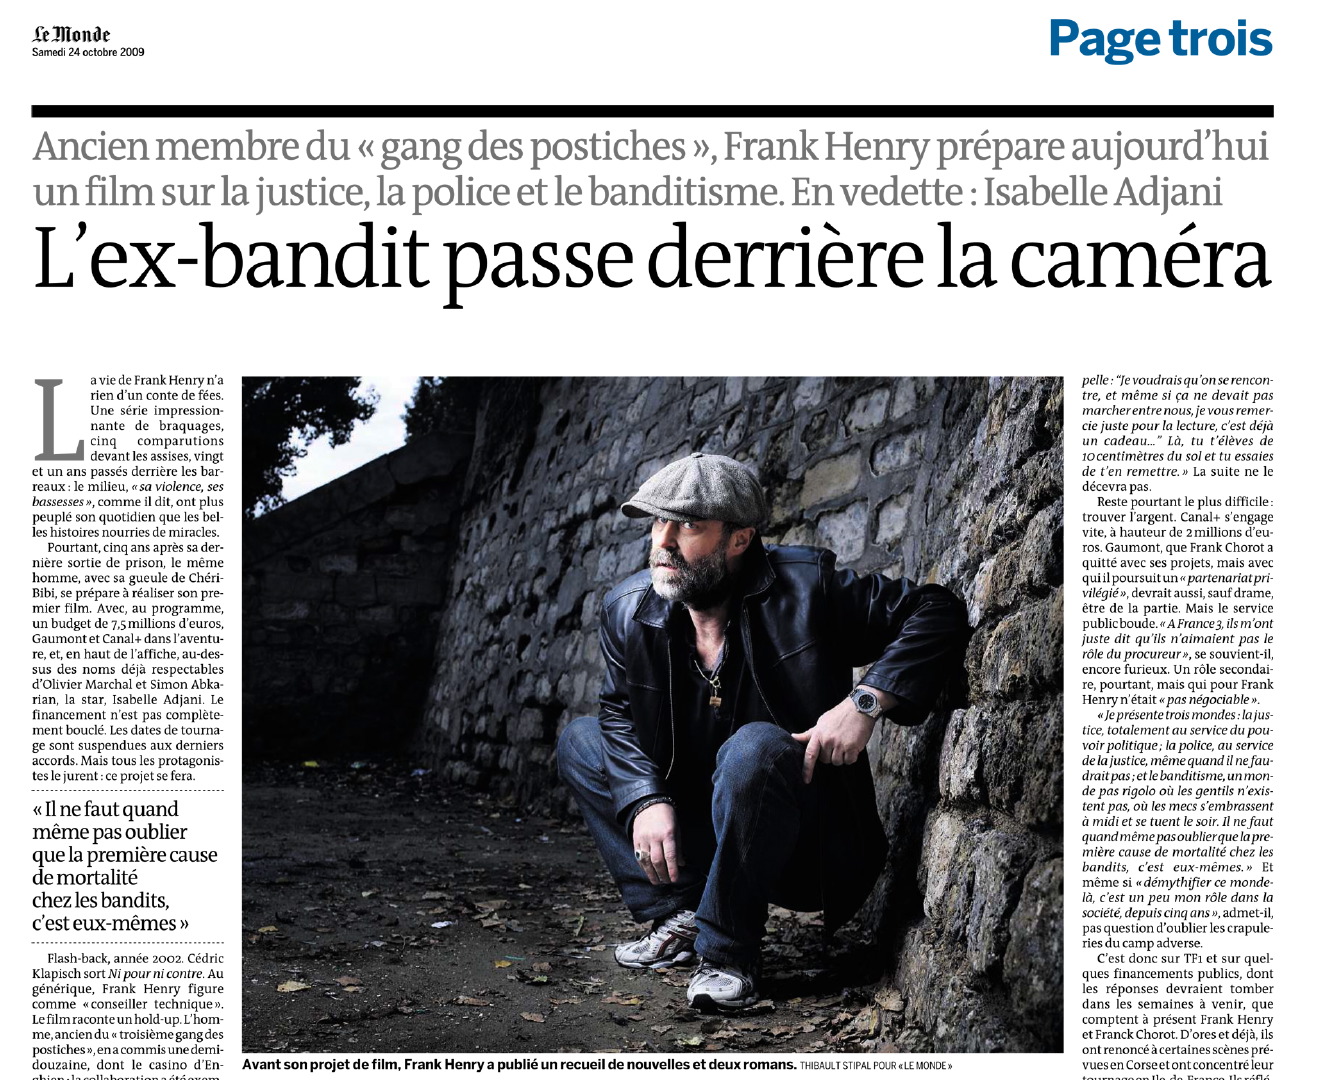 Thibault Stipal - Photographe - Franck Henry / Le Monde - 1